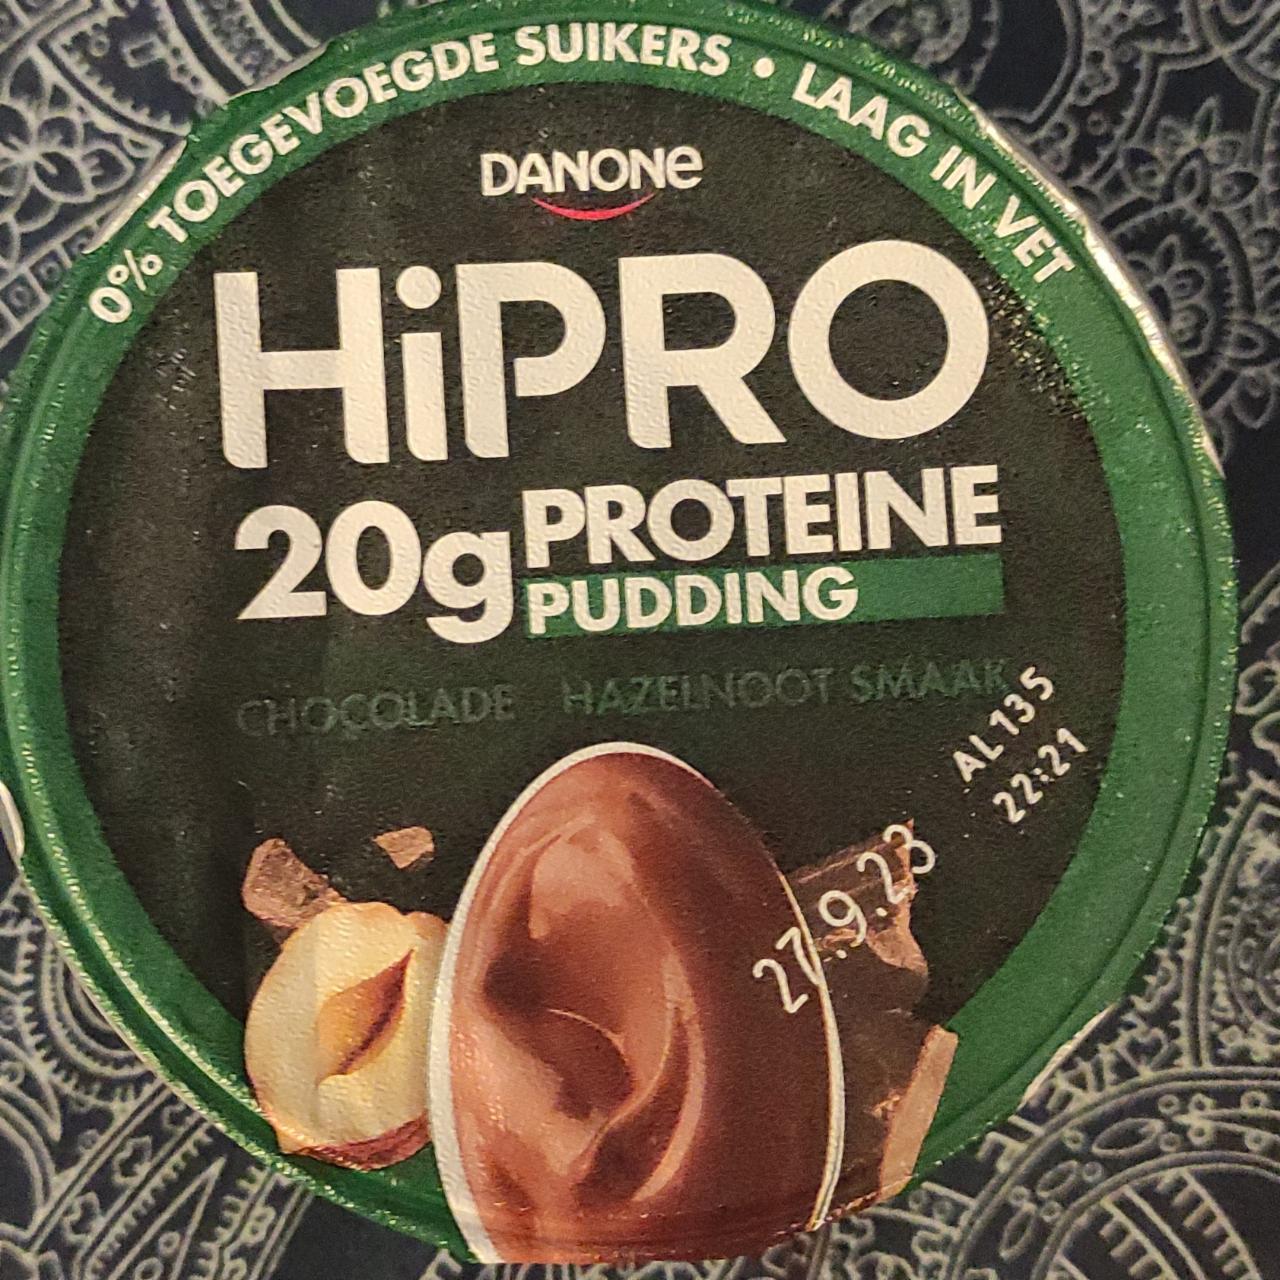 Zdjęcia - HiPRO 20g proteine pudding chocolade hazelnoot smaak Danone